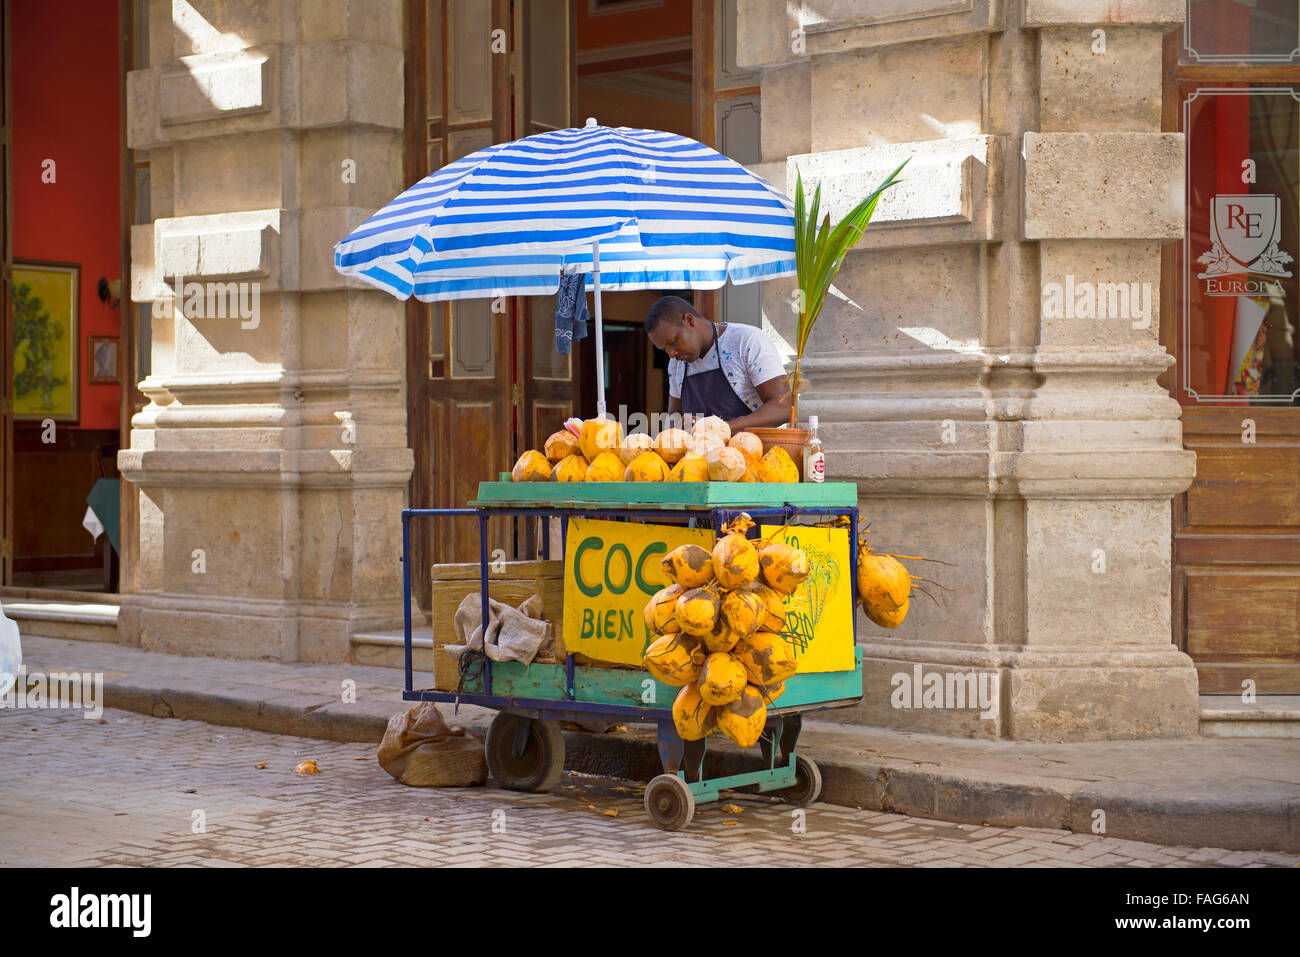 Man selling Coconuts in Havana, Cuba Street Vendor Stock Photo